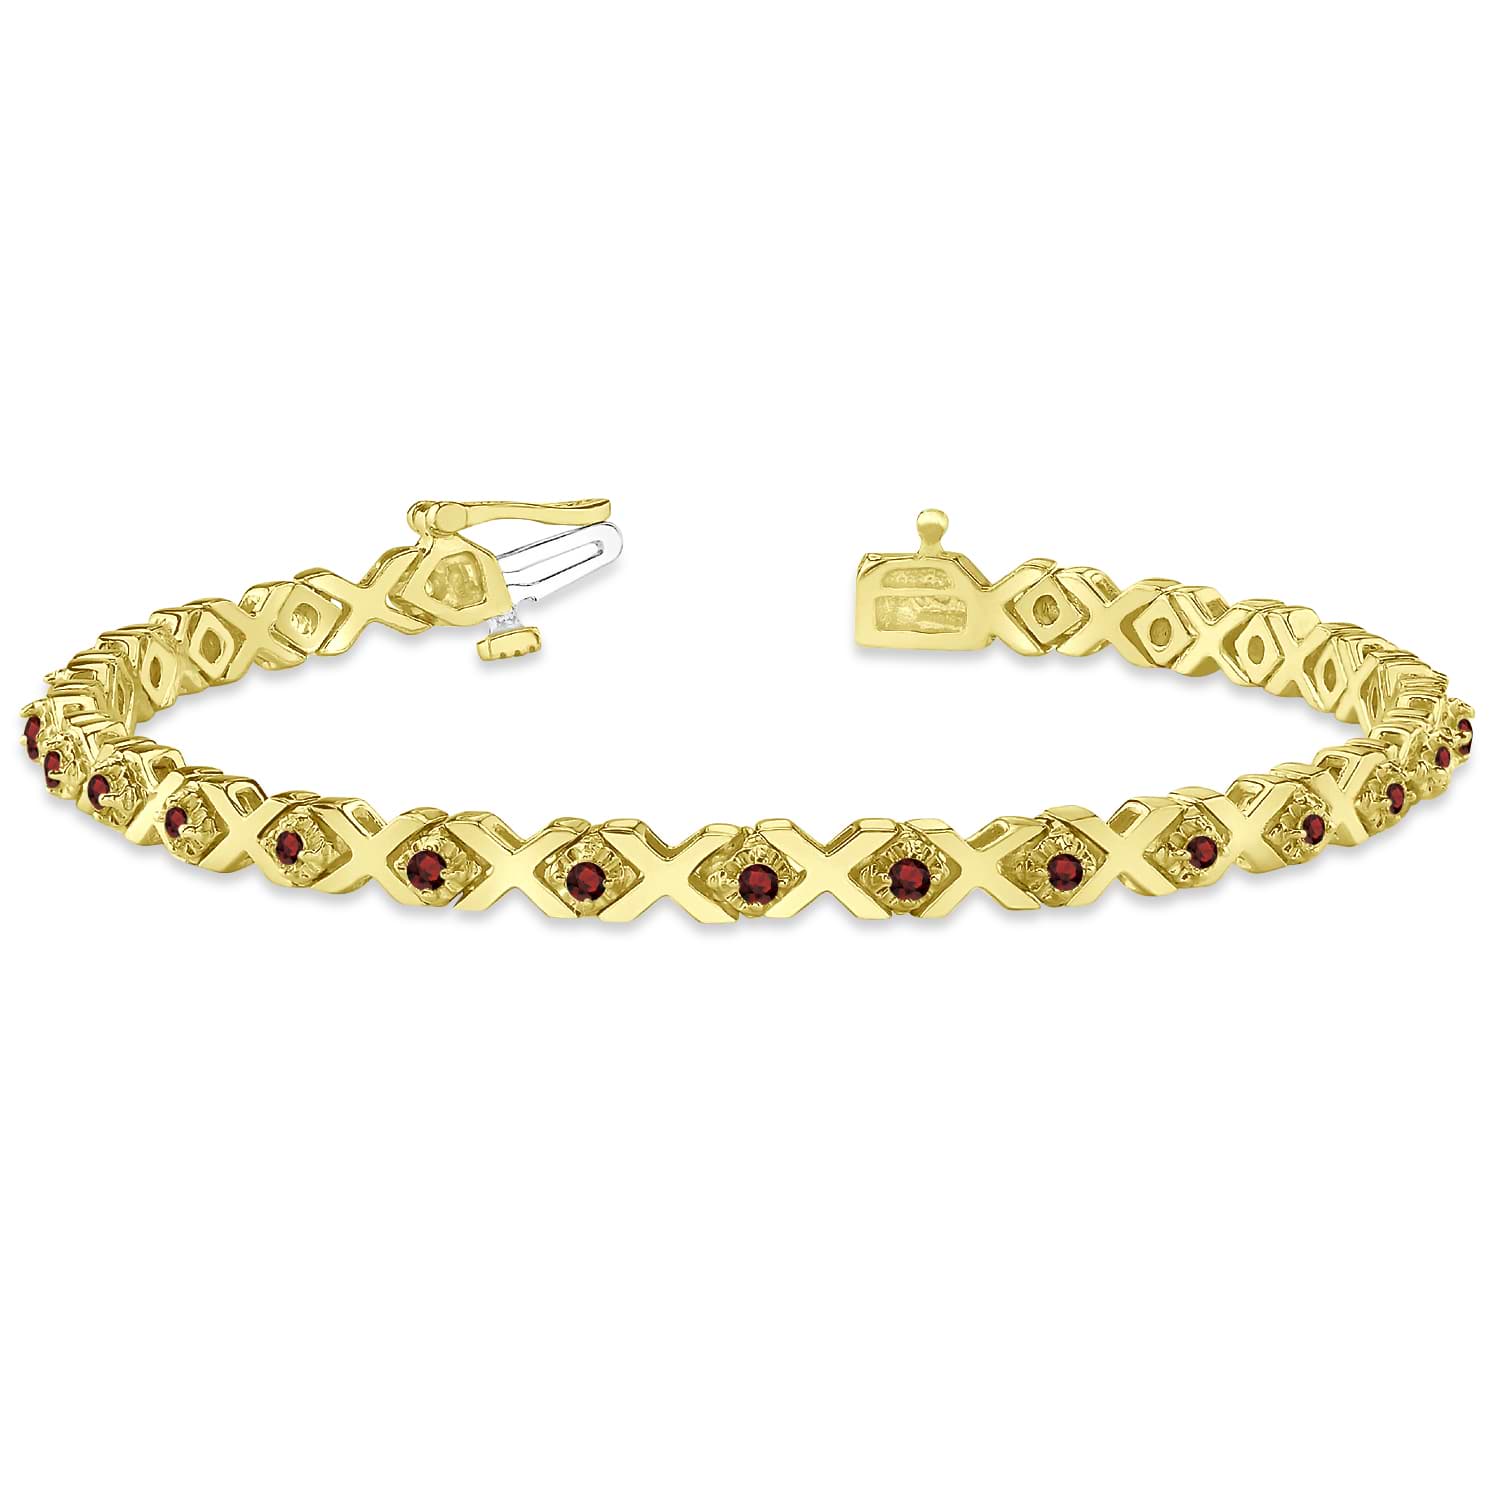 Garnet XOXO Chained Line Bracelet 14k Yellow Gold (1.50ct)